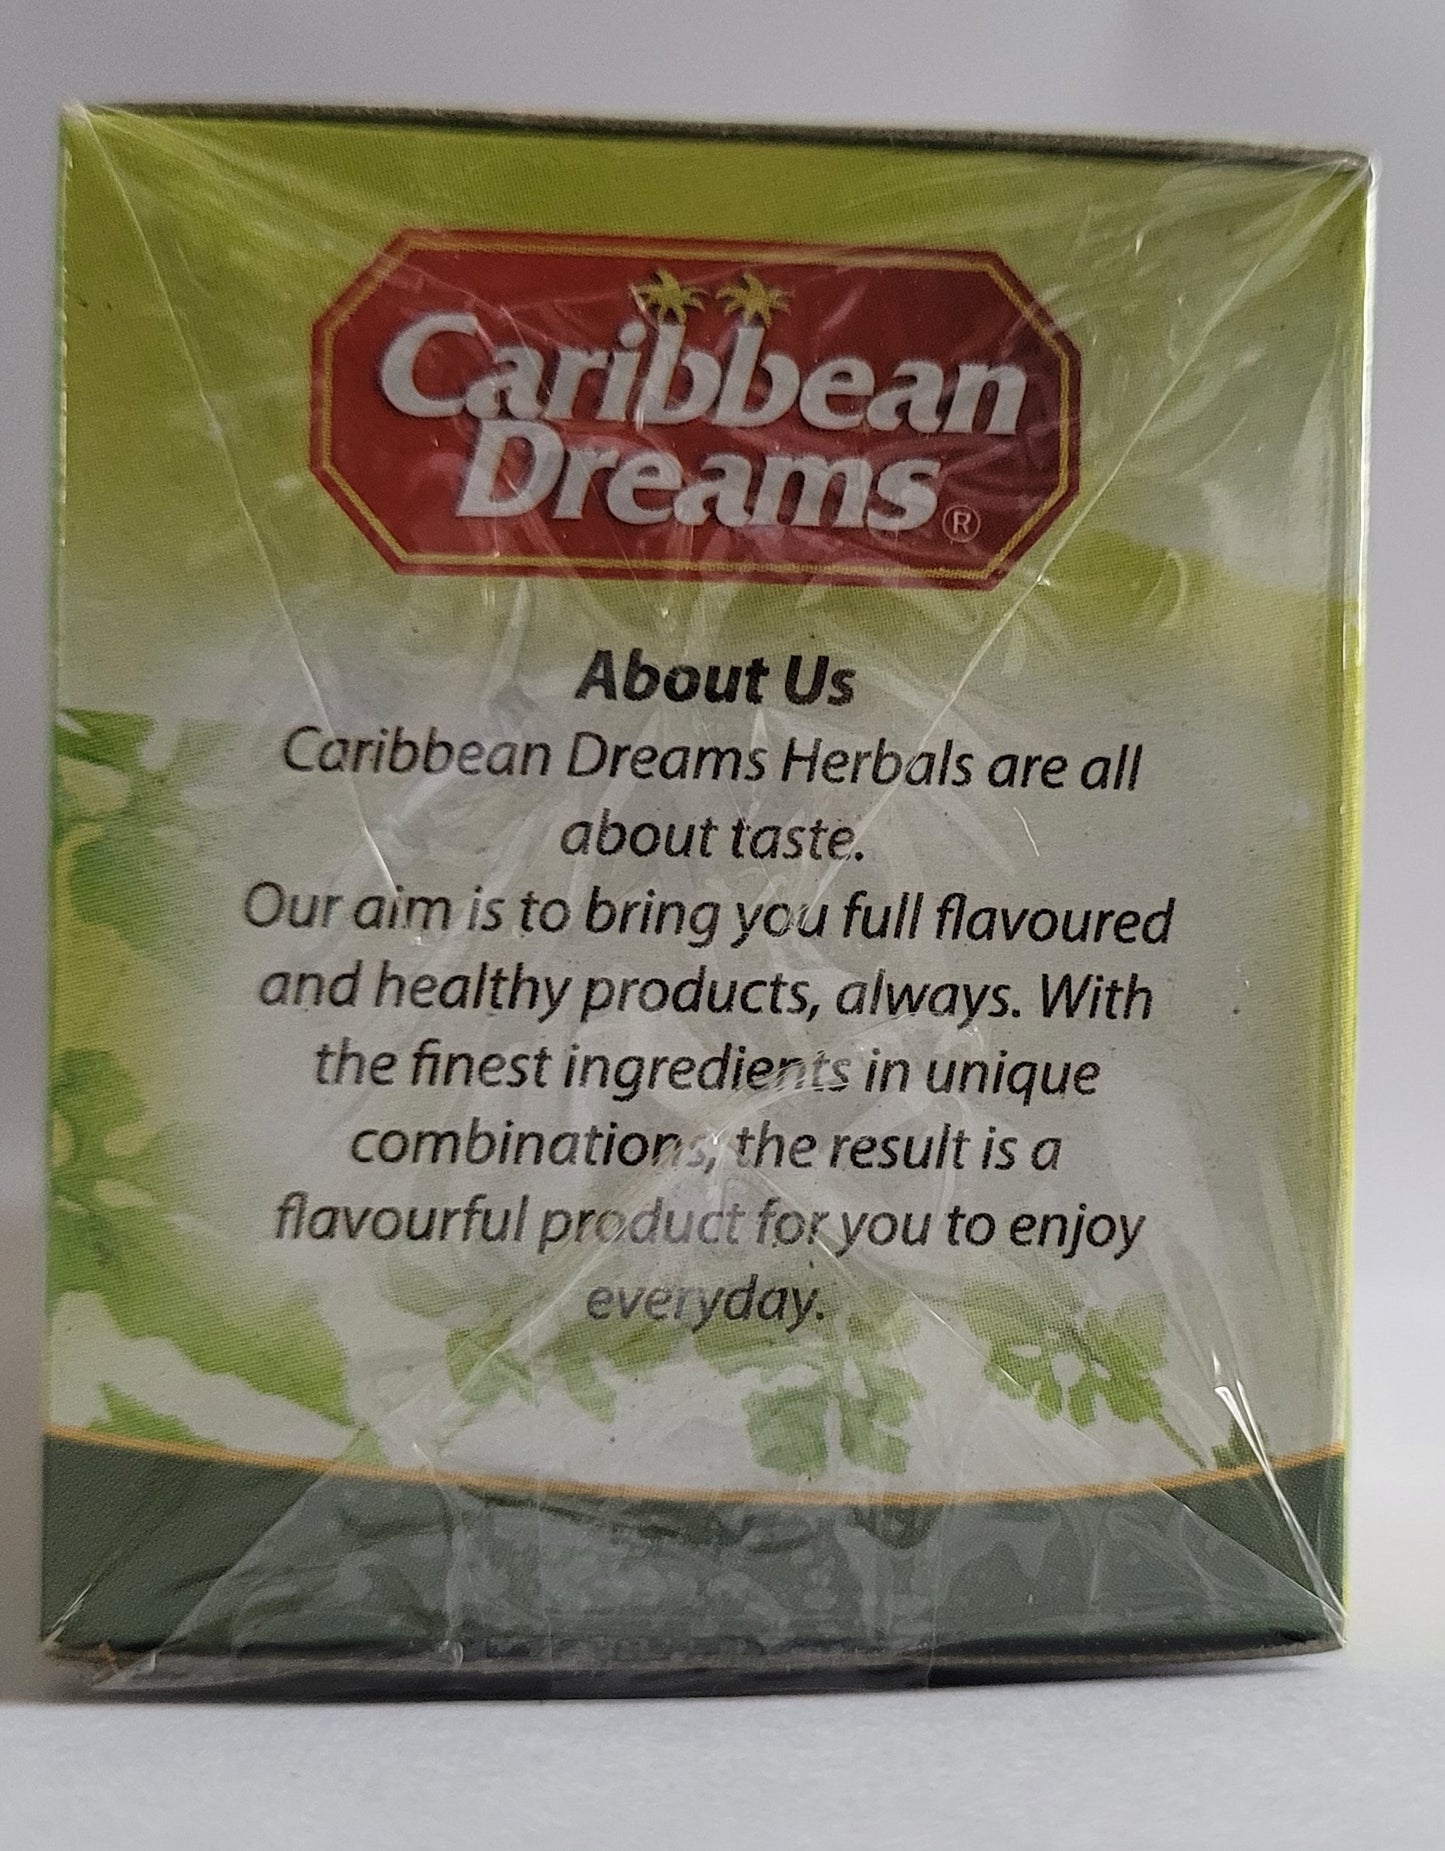 Tea - Cerasee Herbal Tea Caribbean Dreams 22g